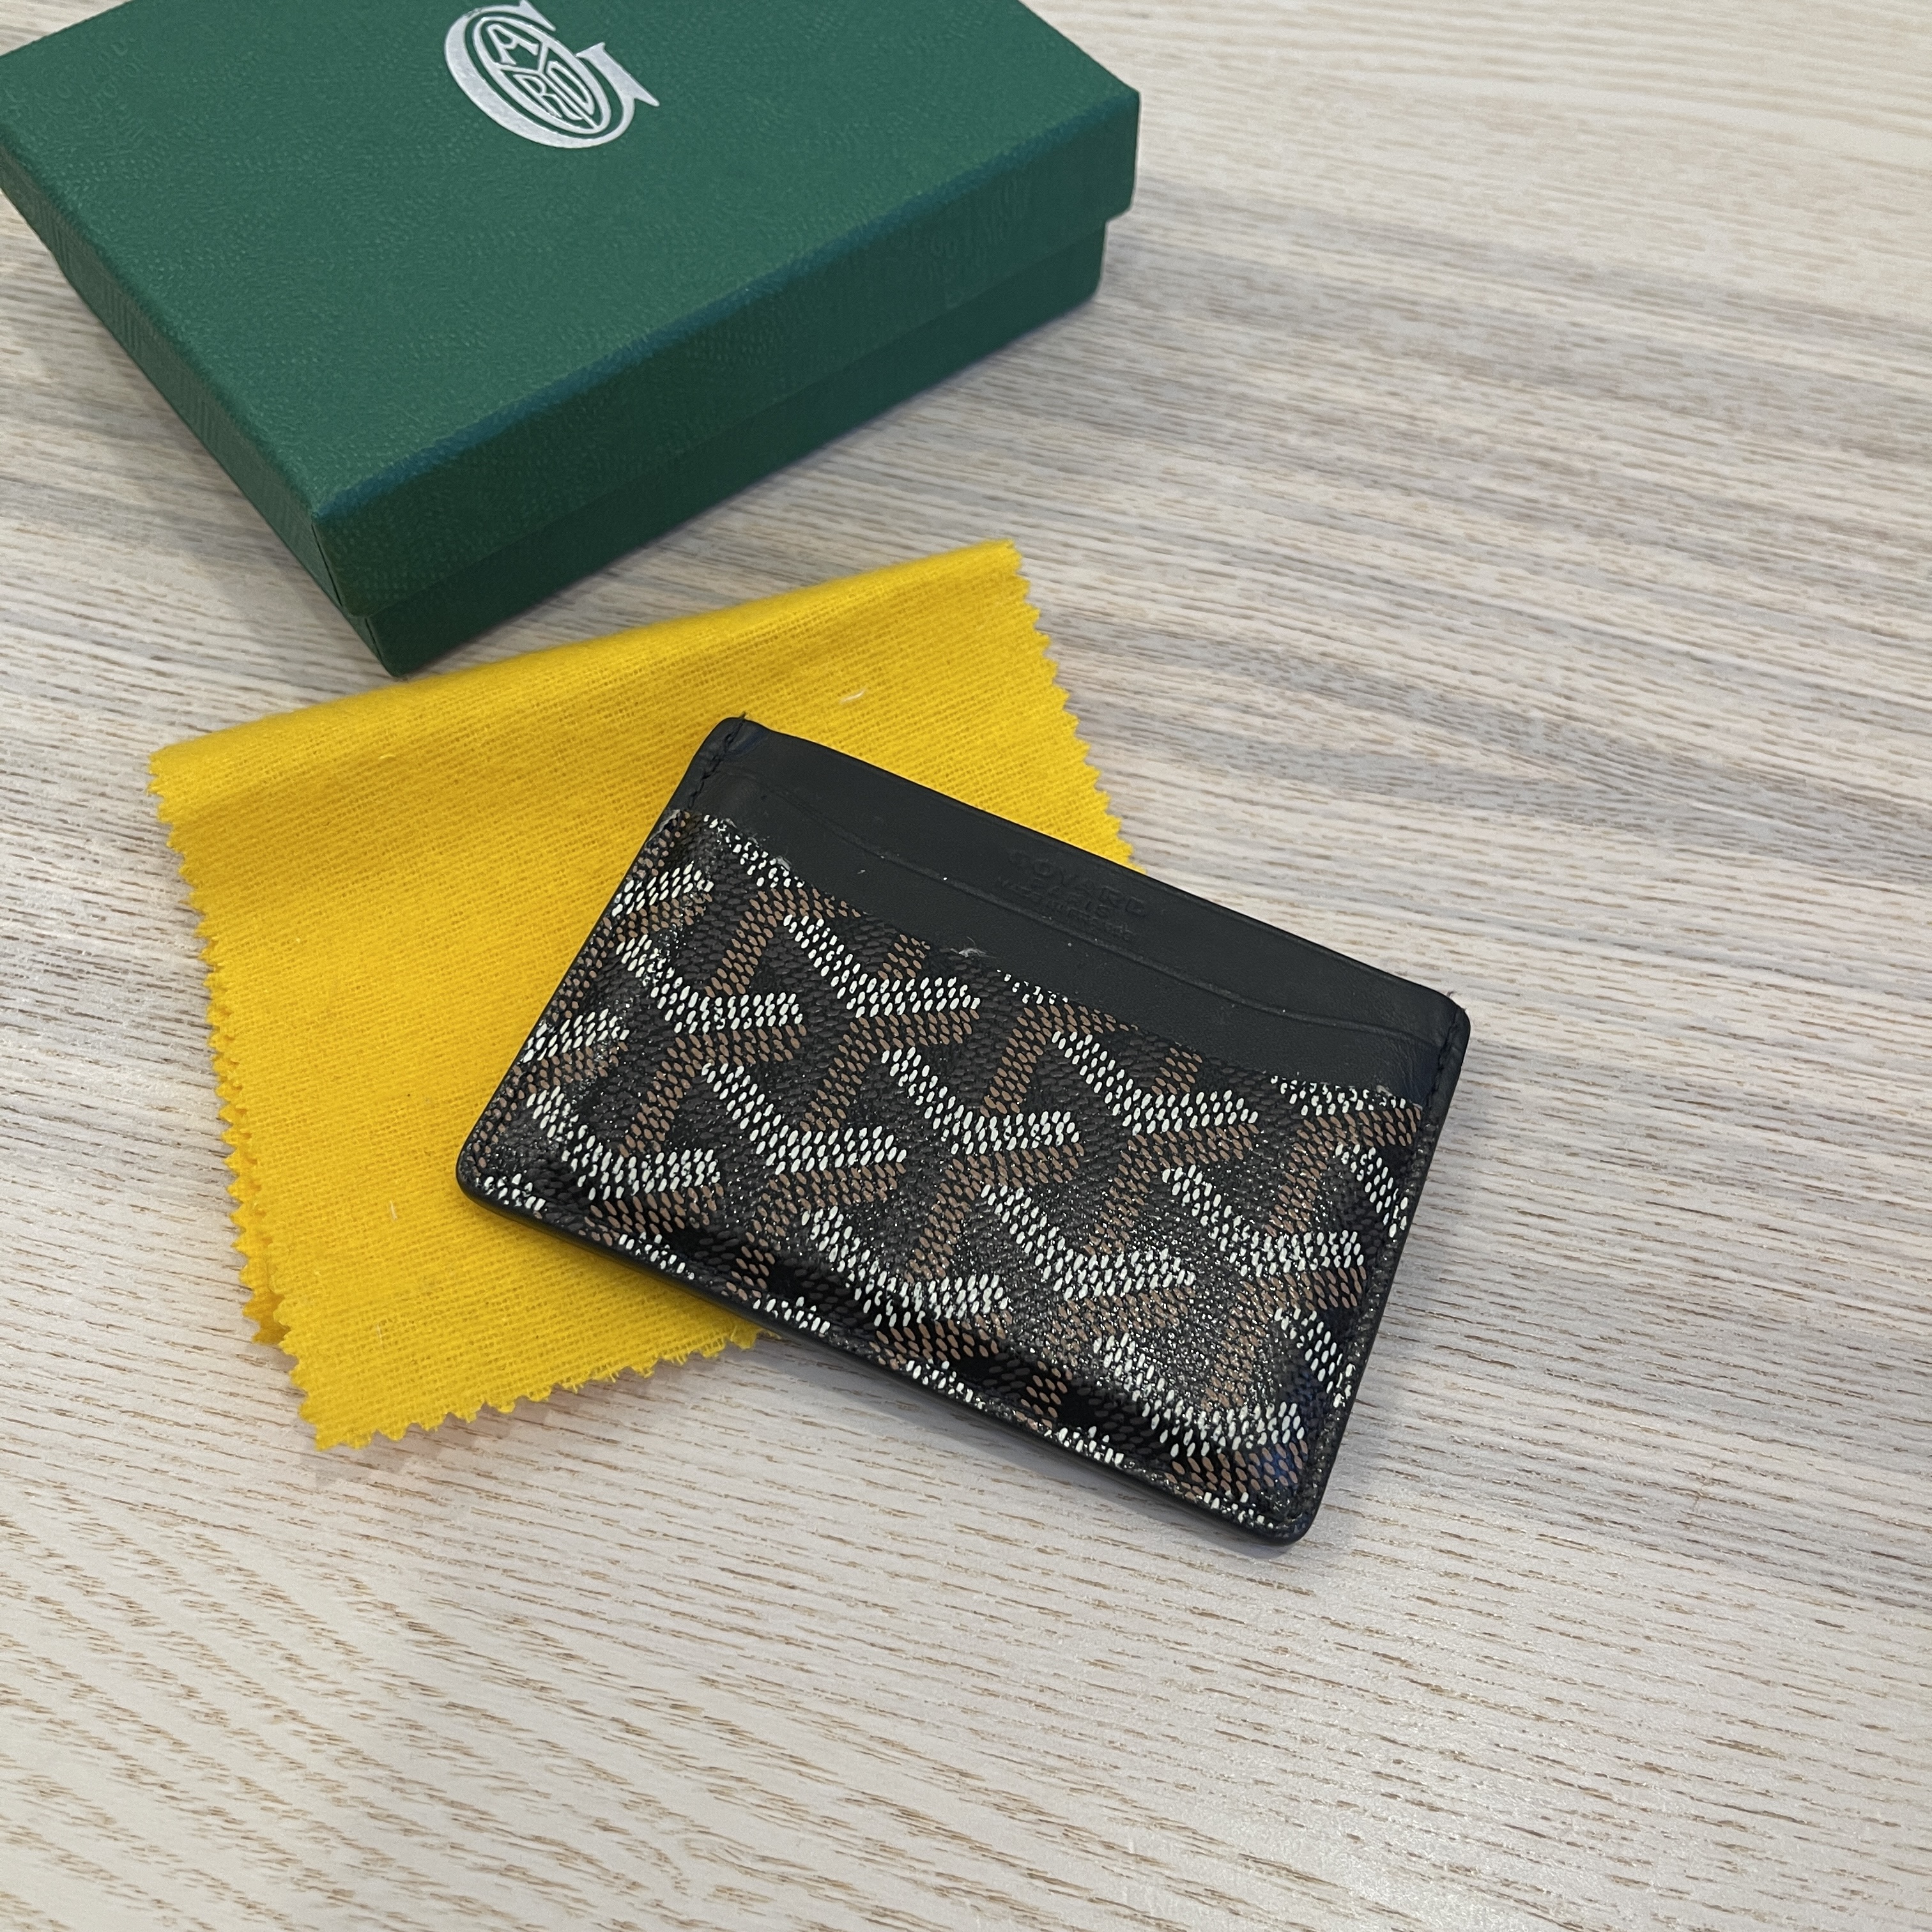 Goyard Card Holder - Black  Goyard card holder, Holder black, Goyard